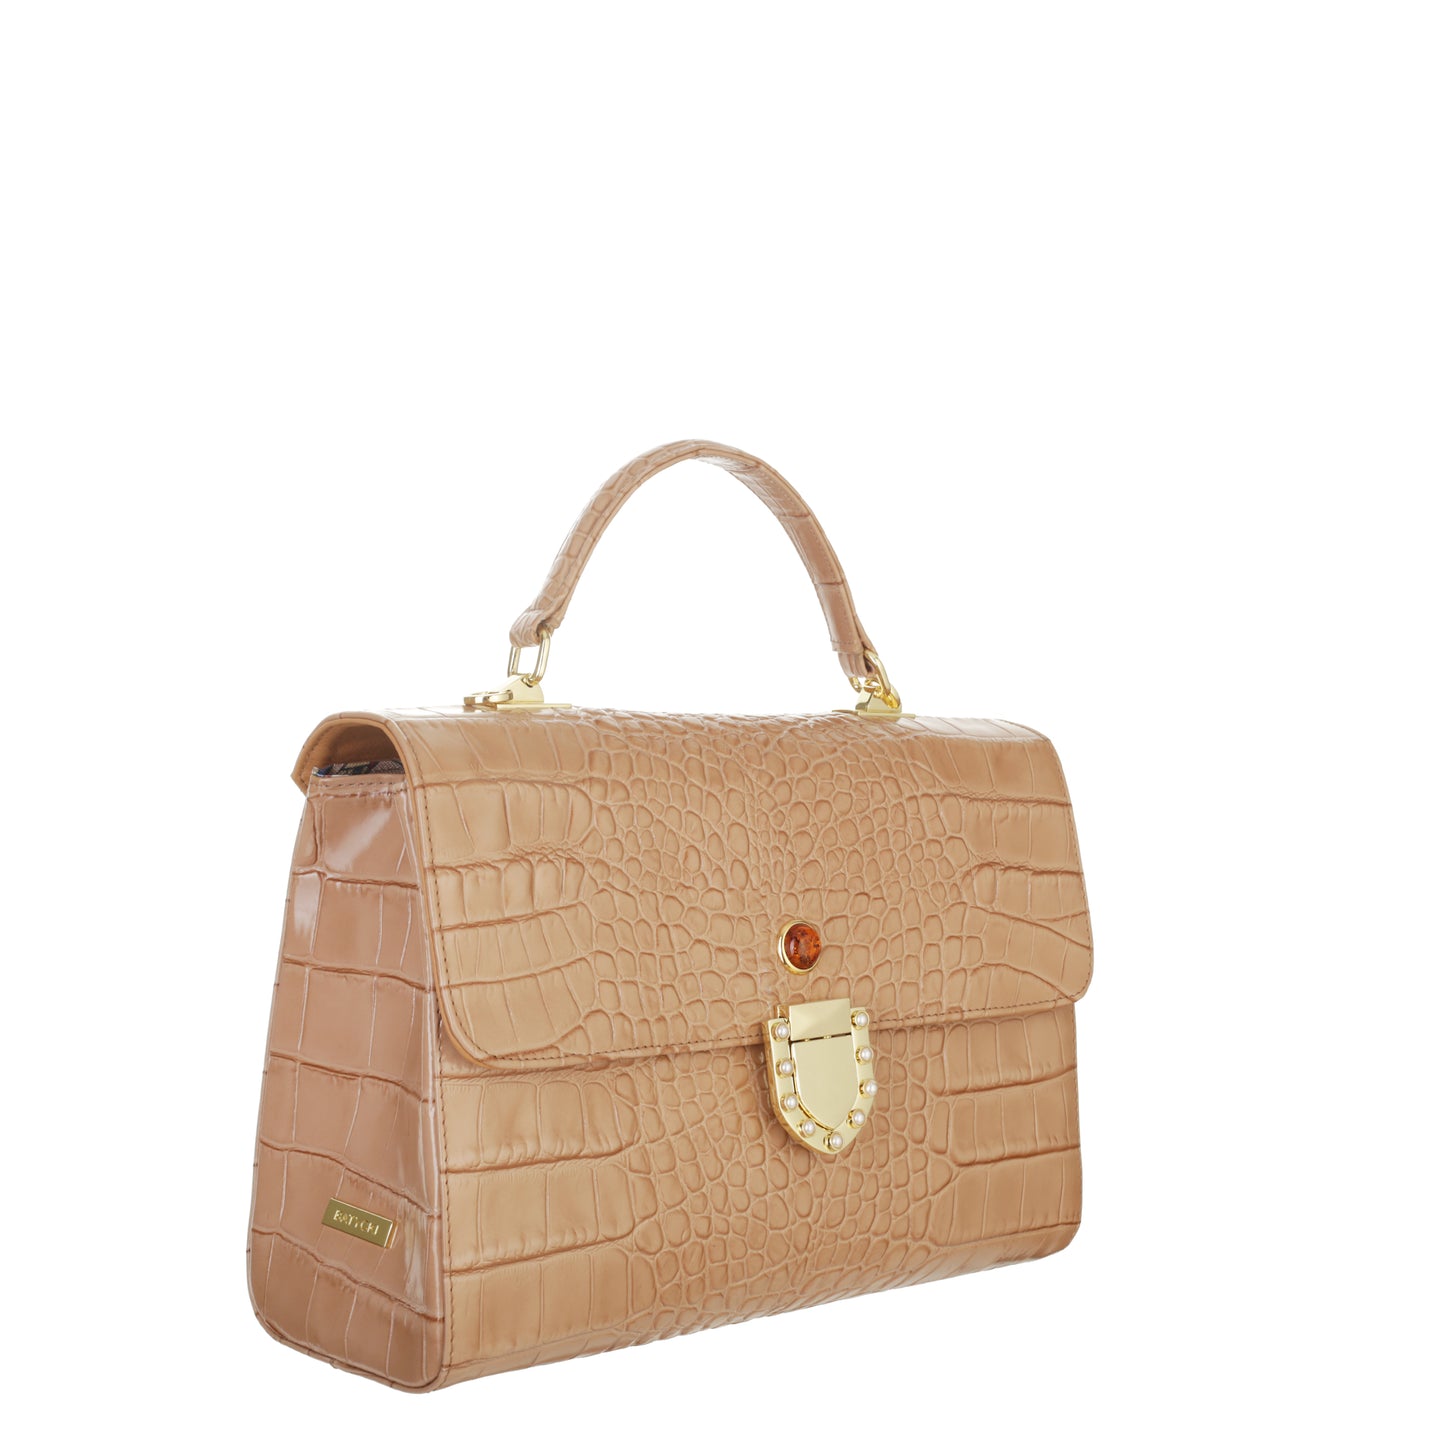 COBE croco camel women's leather handbag